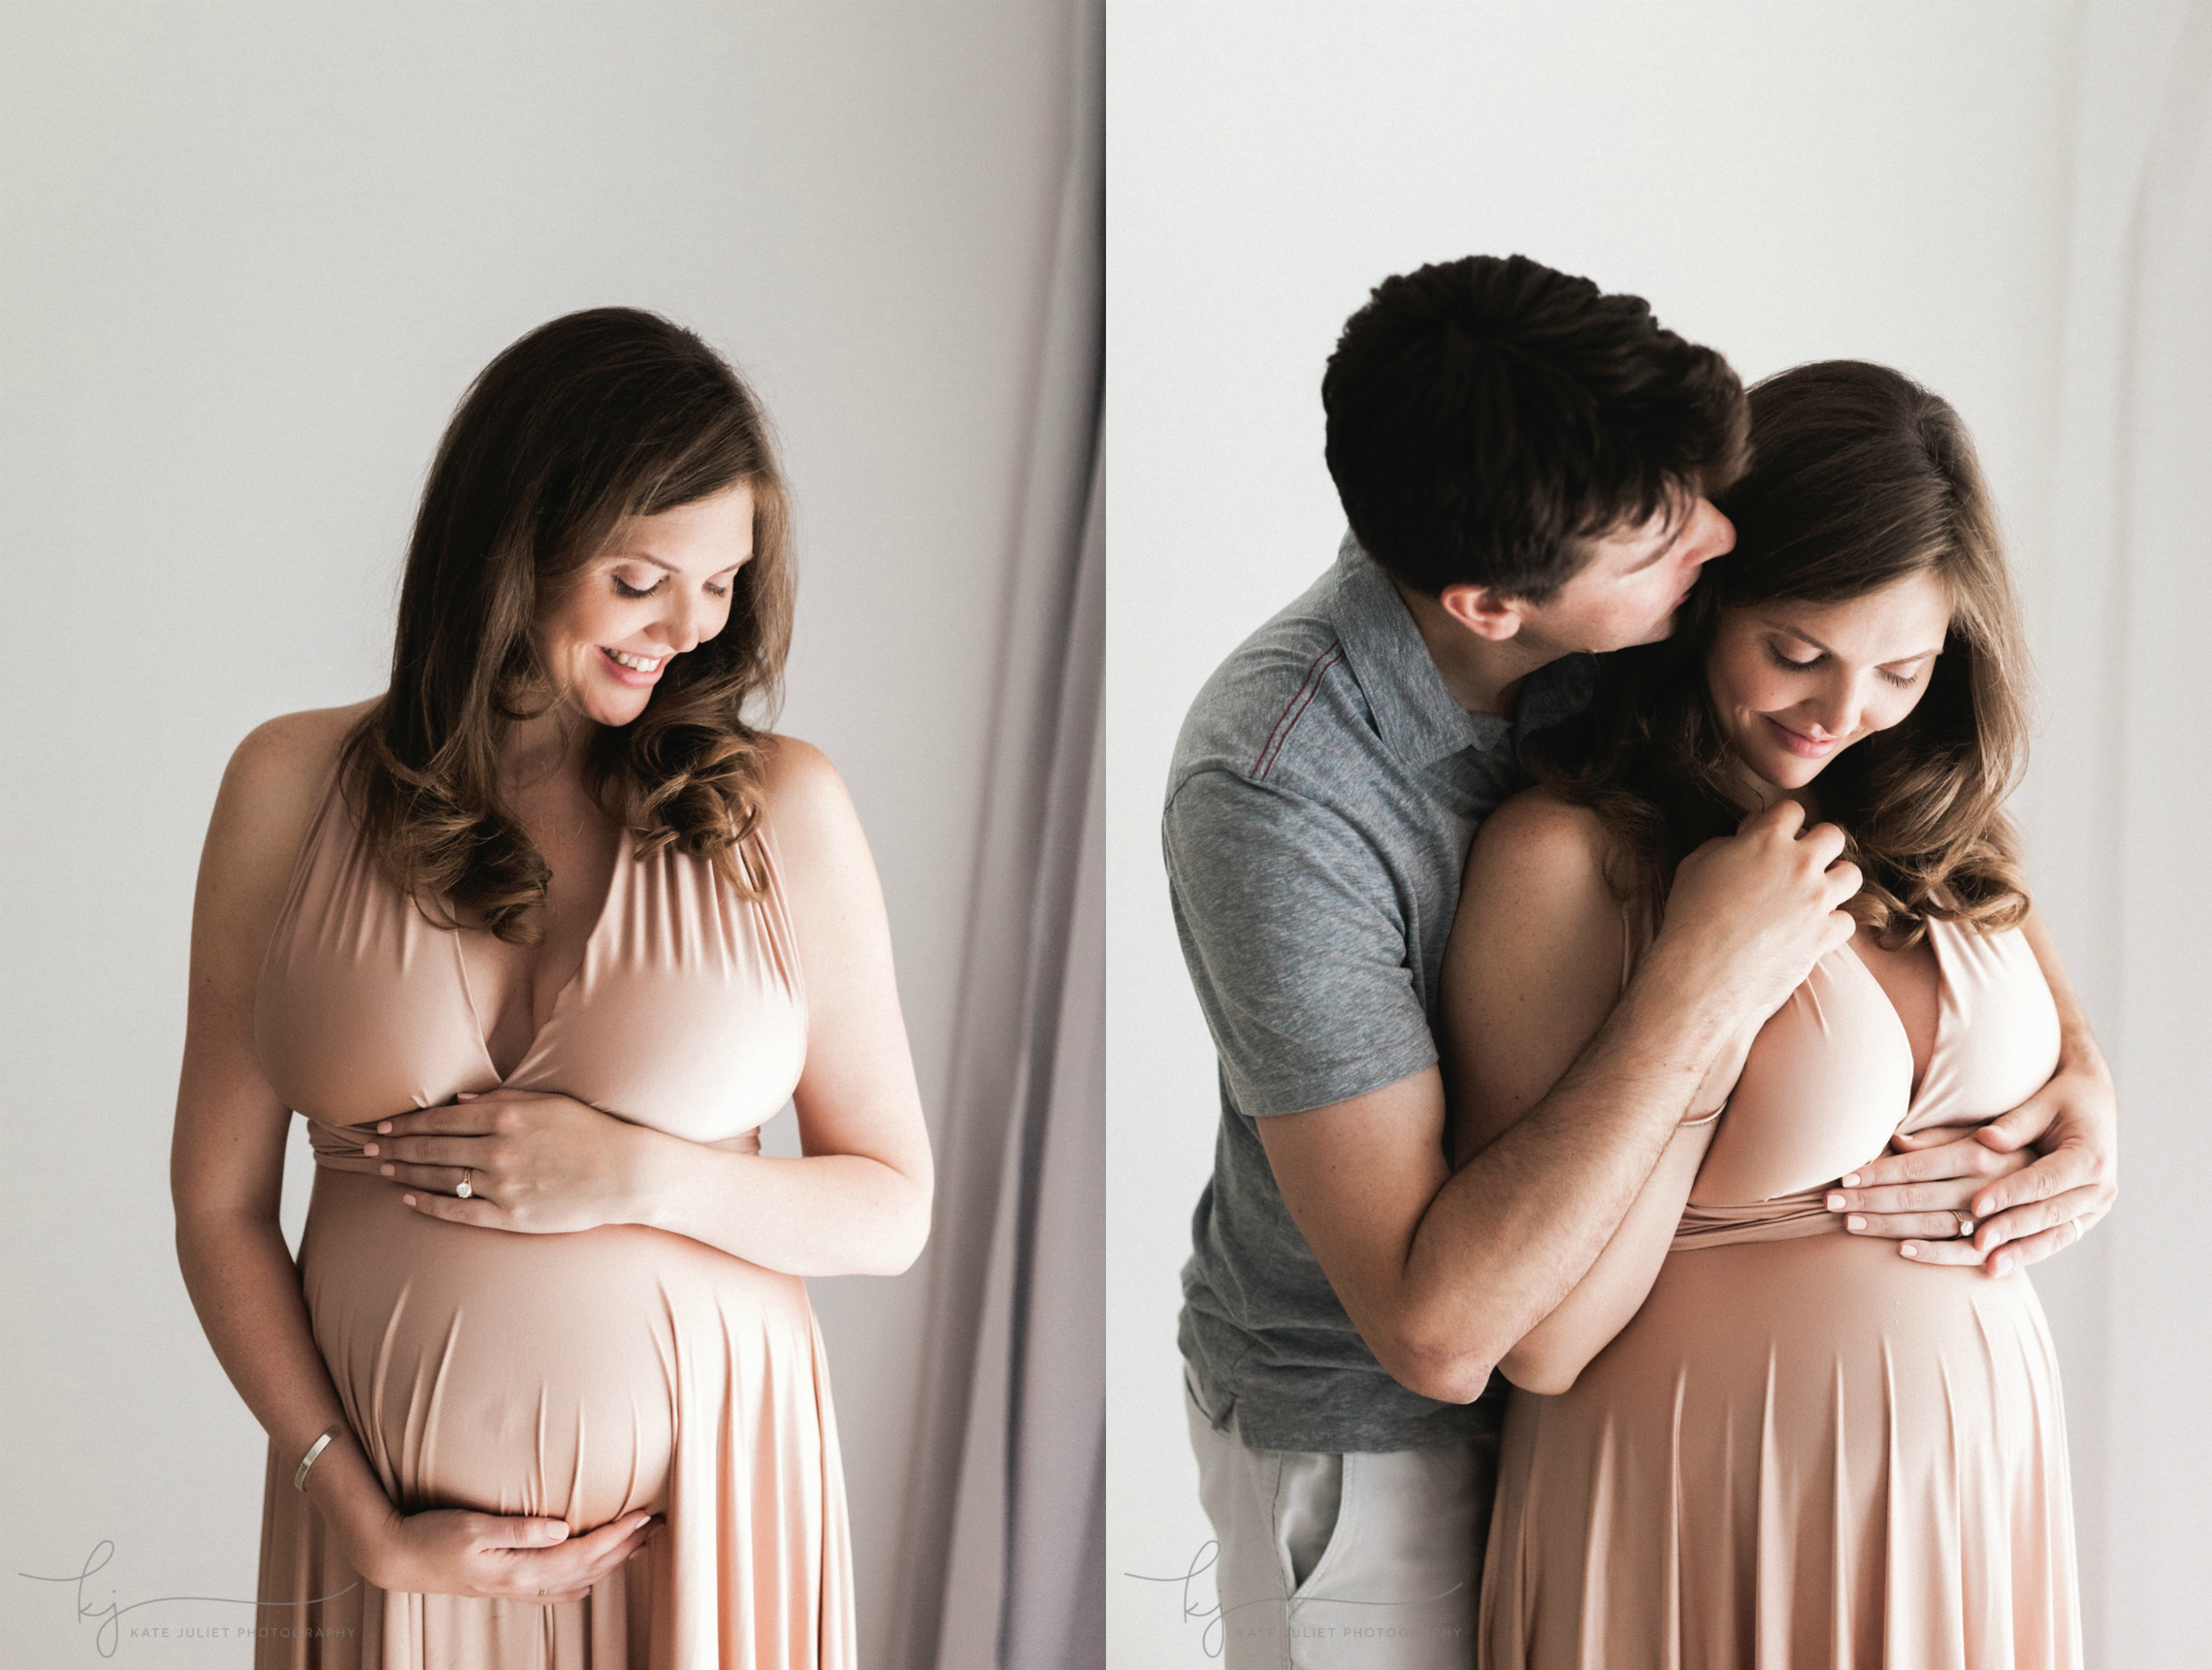 Arlington VA Maternity Photographer | Kate Juliet Photography